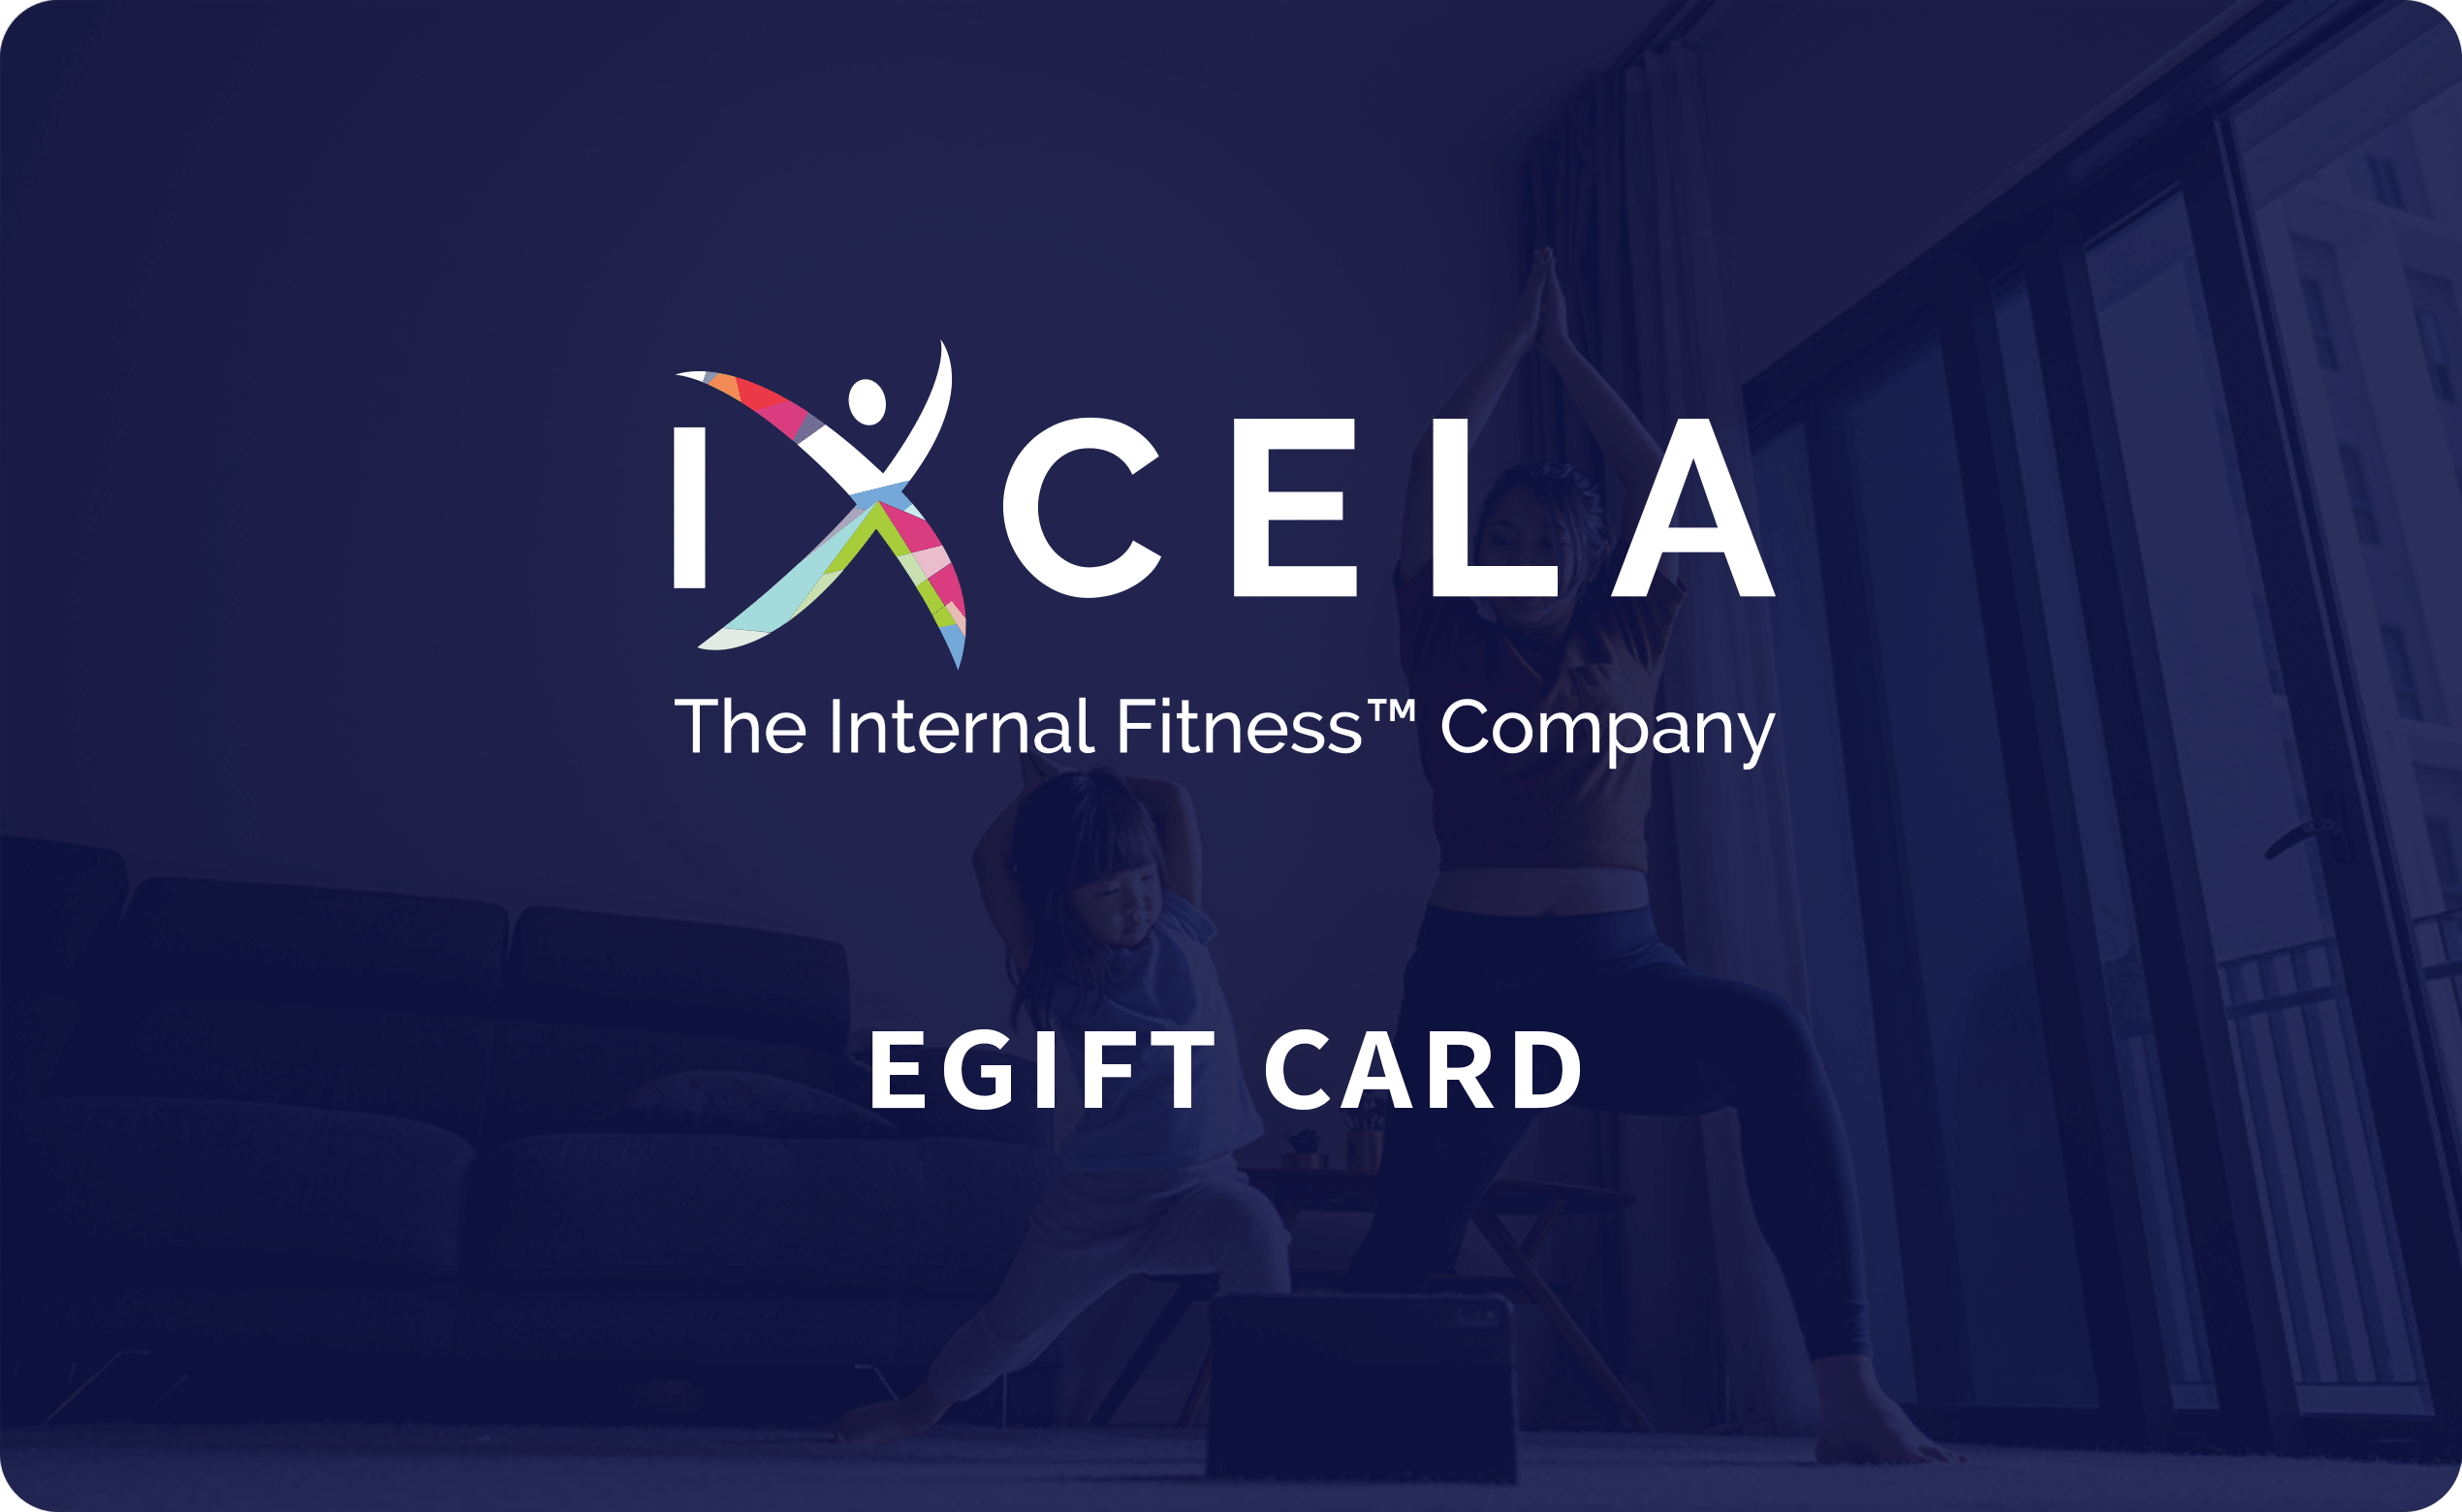 Ixcela eGift Card